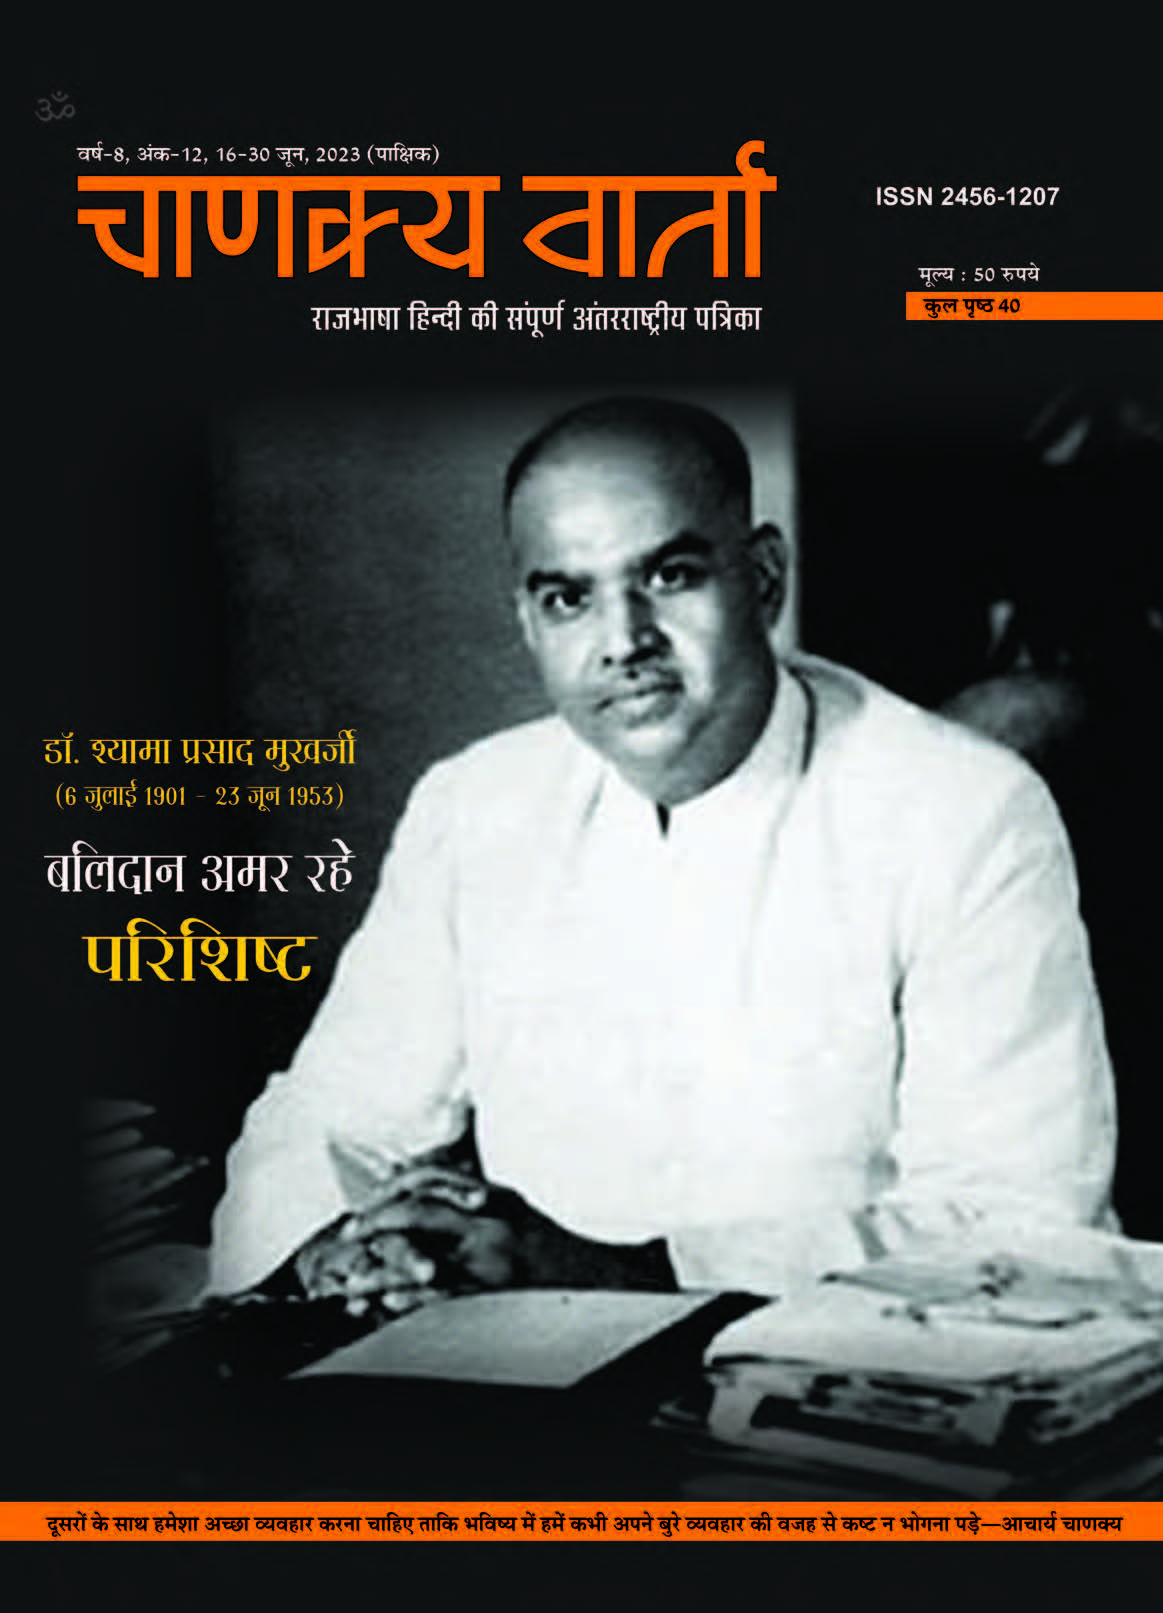 Chanakya Varta 16 - 30 June '23